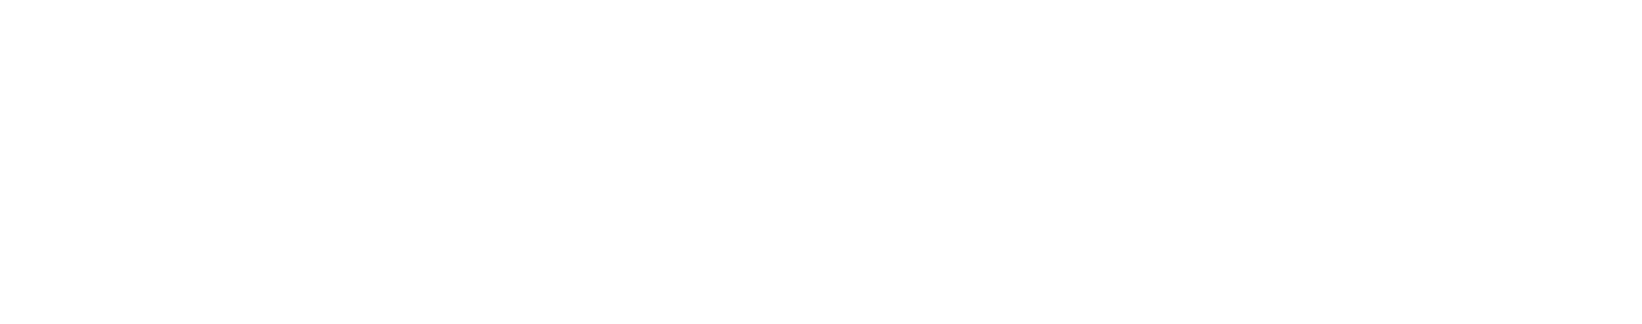 Henderson State University logo.